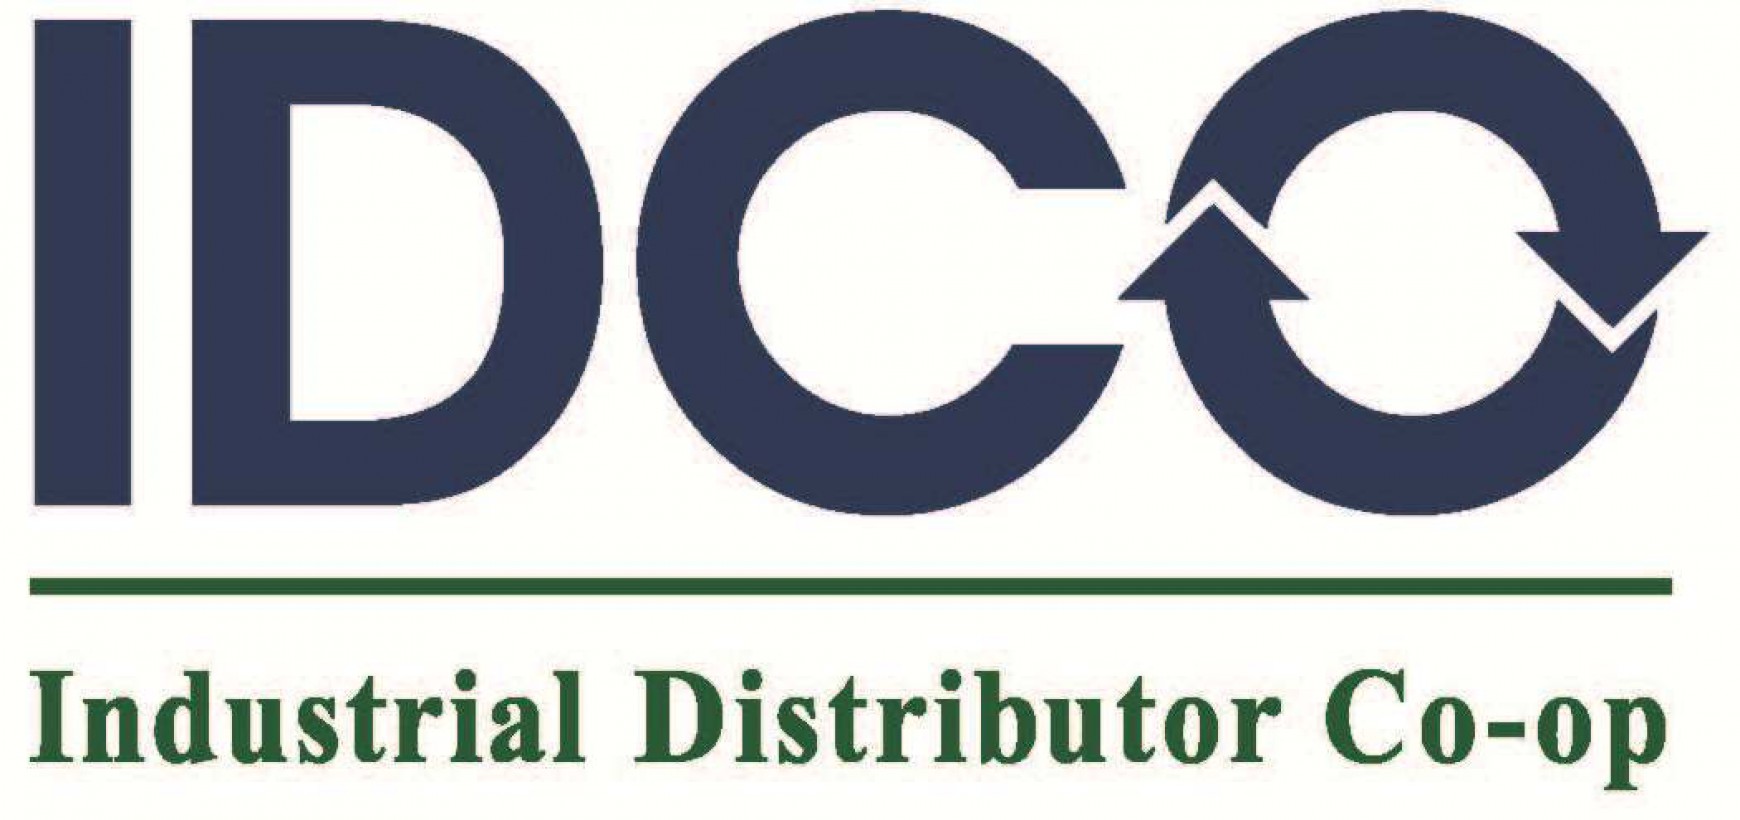 IDCO Industrial Distributor Co-op